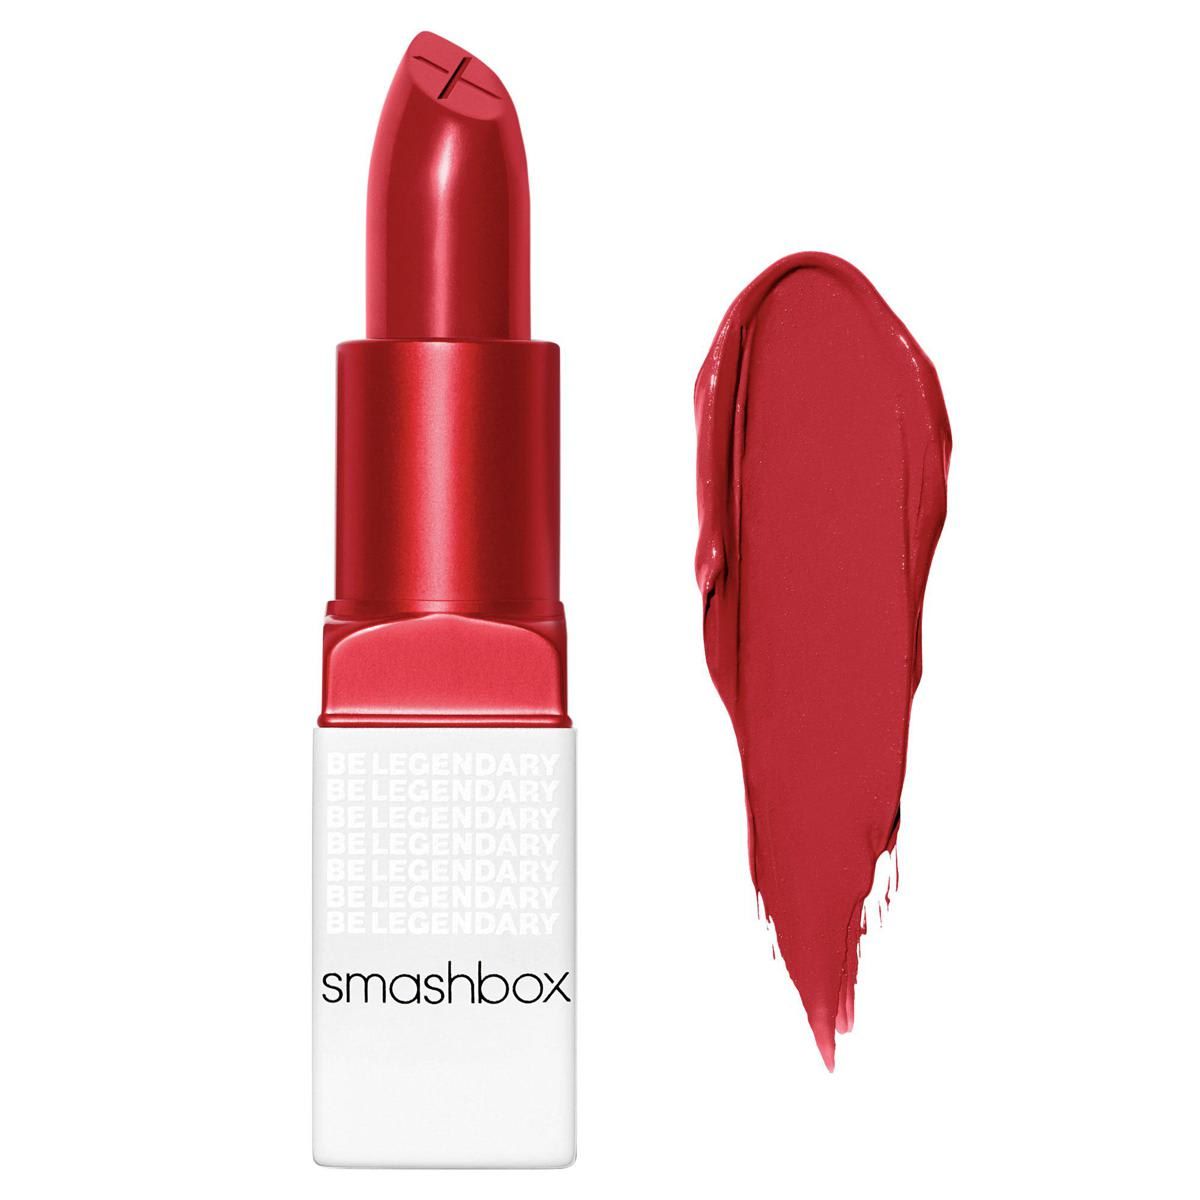 SMASHBOX - Be Legendary Prime & Plush Lipstick